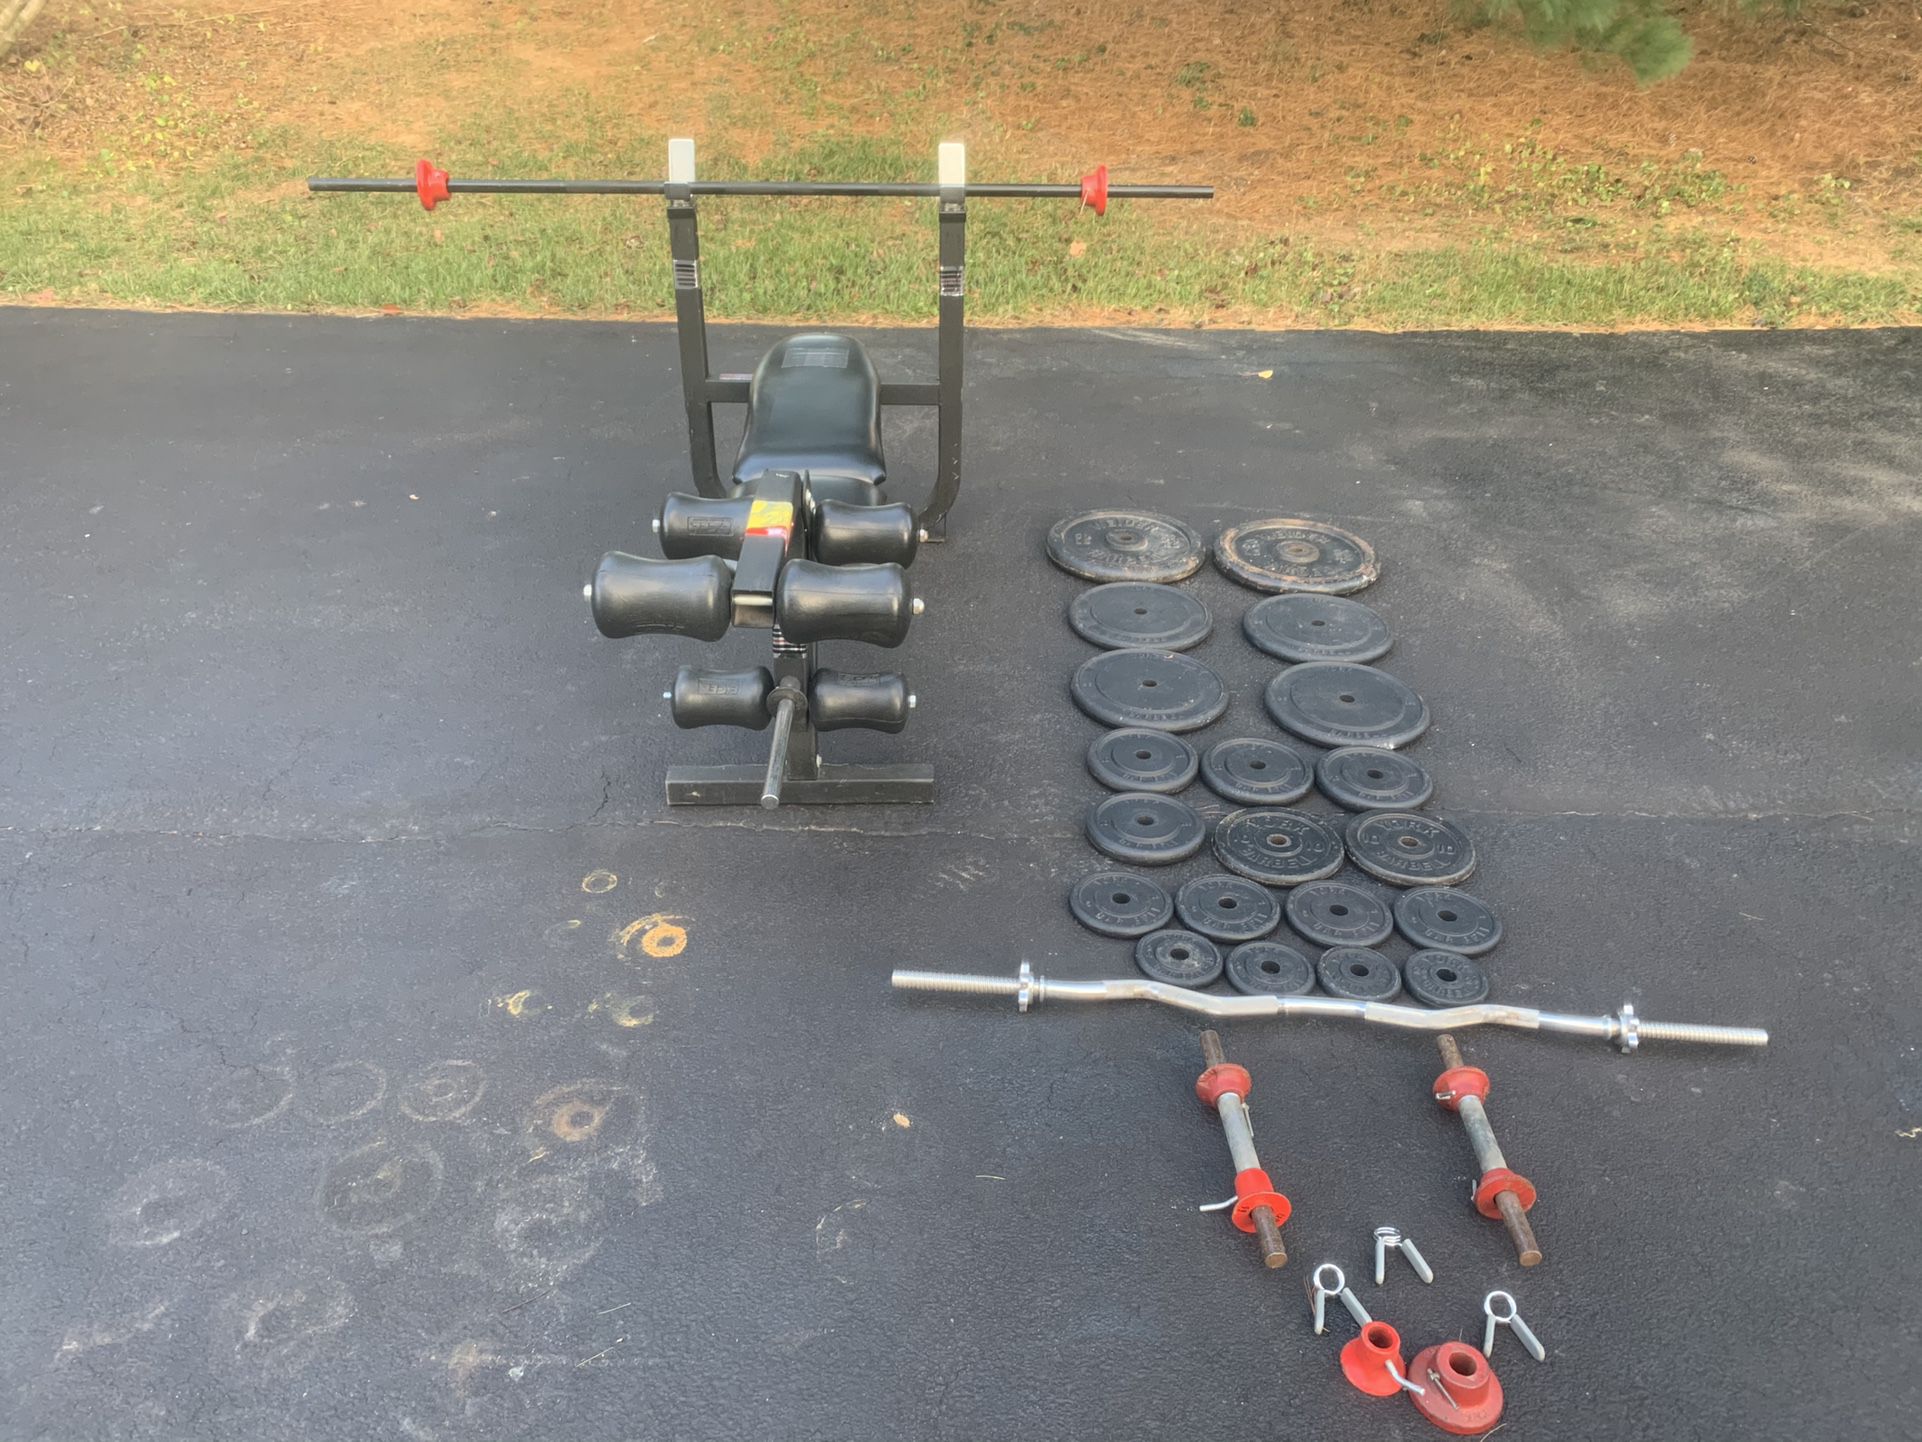 Home gym bundle-Bench bar 290lbs in weight, curl bar, adjustable dumbells